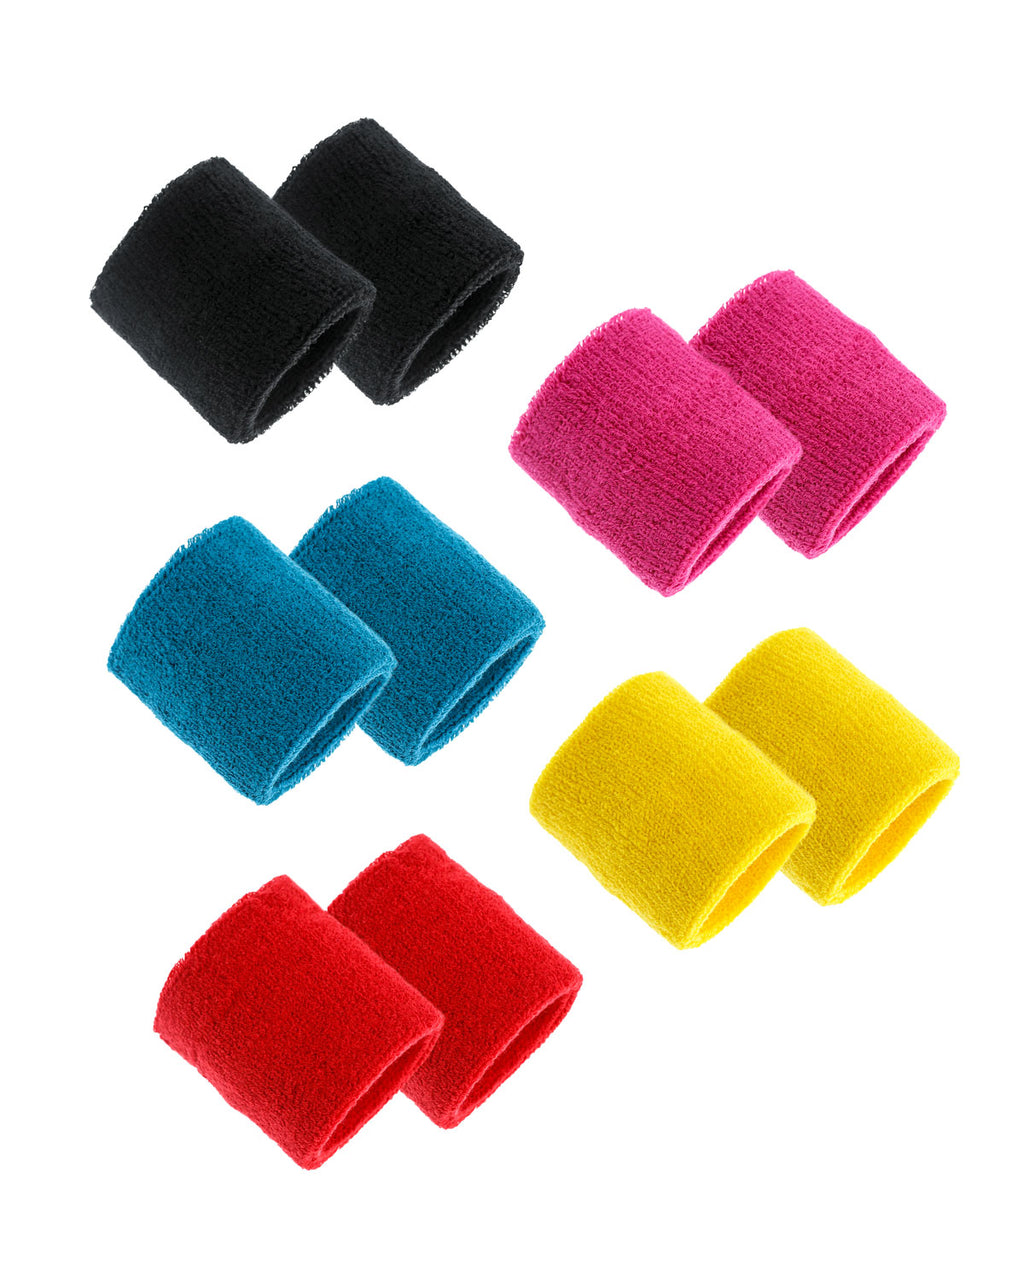 Sweatband Sets | 5 Colors